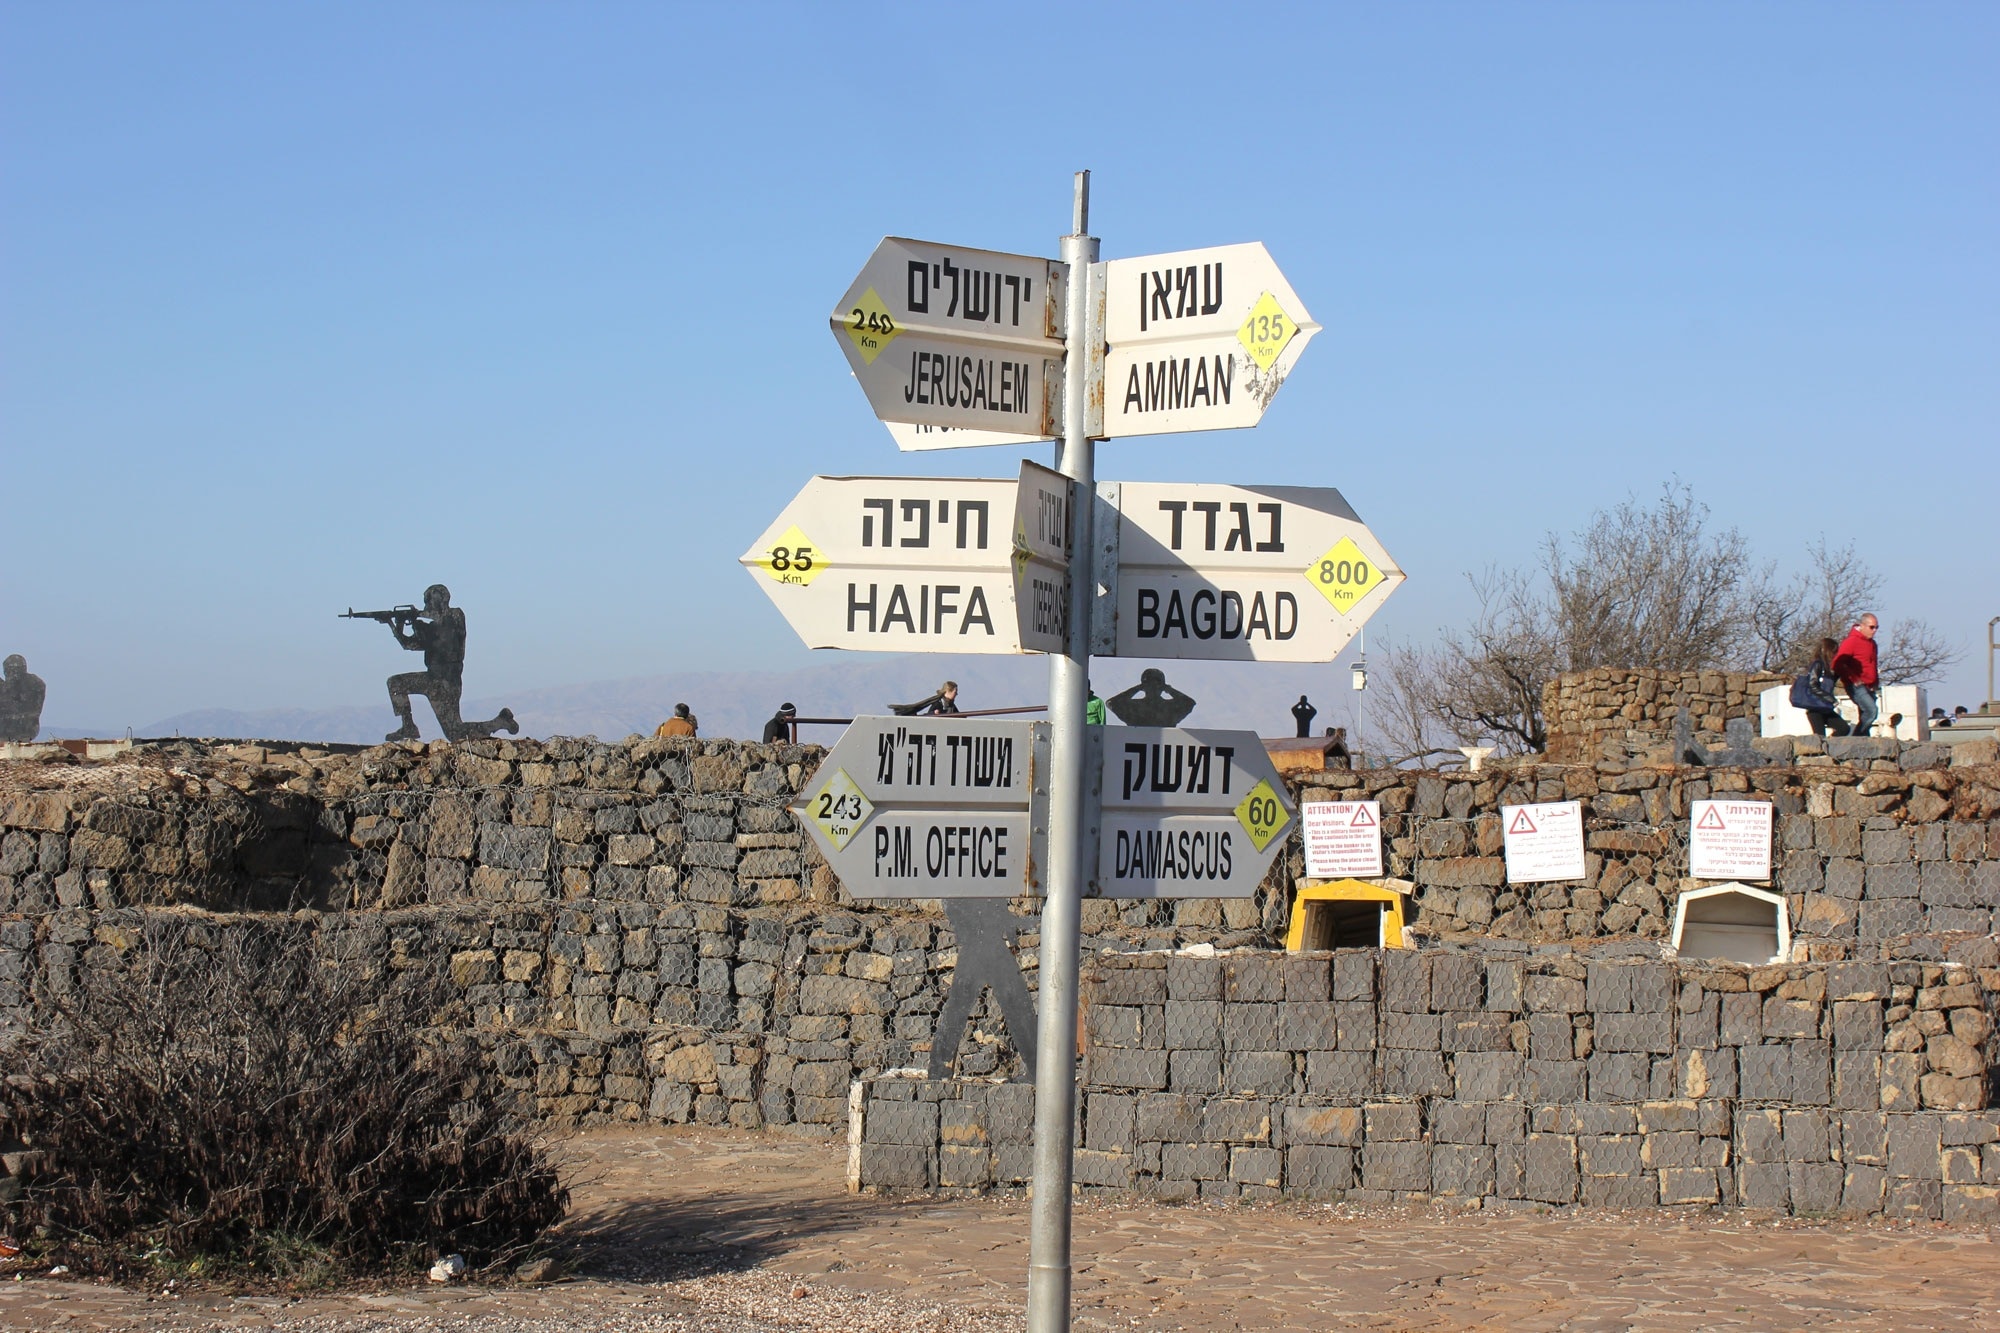 haifa bagdad signage